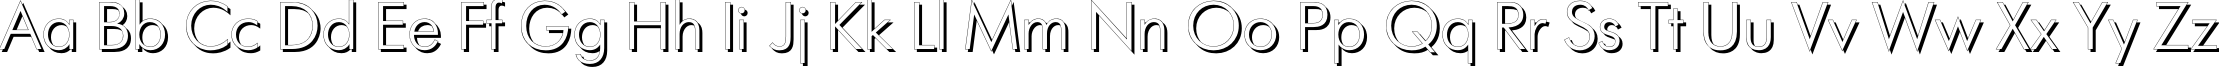 Пример написания английского алфавита шрифтом FuturisShadowC